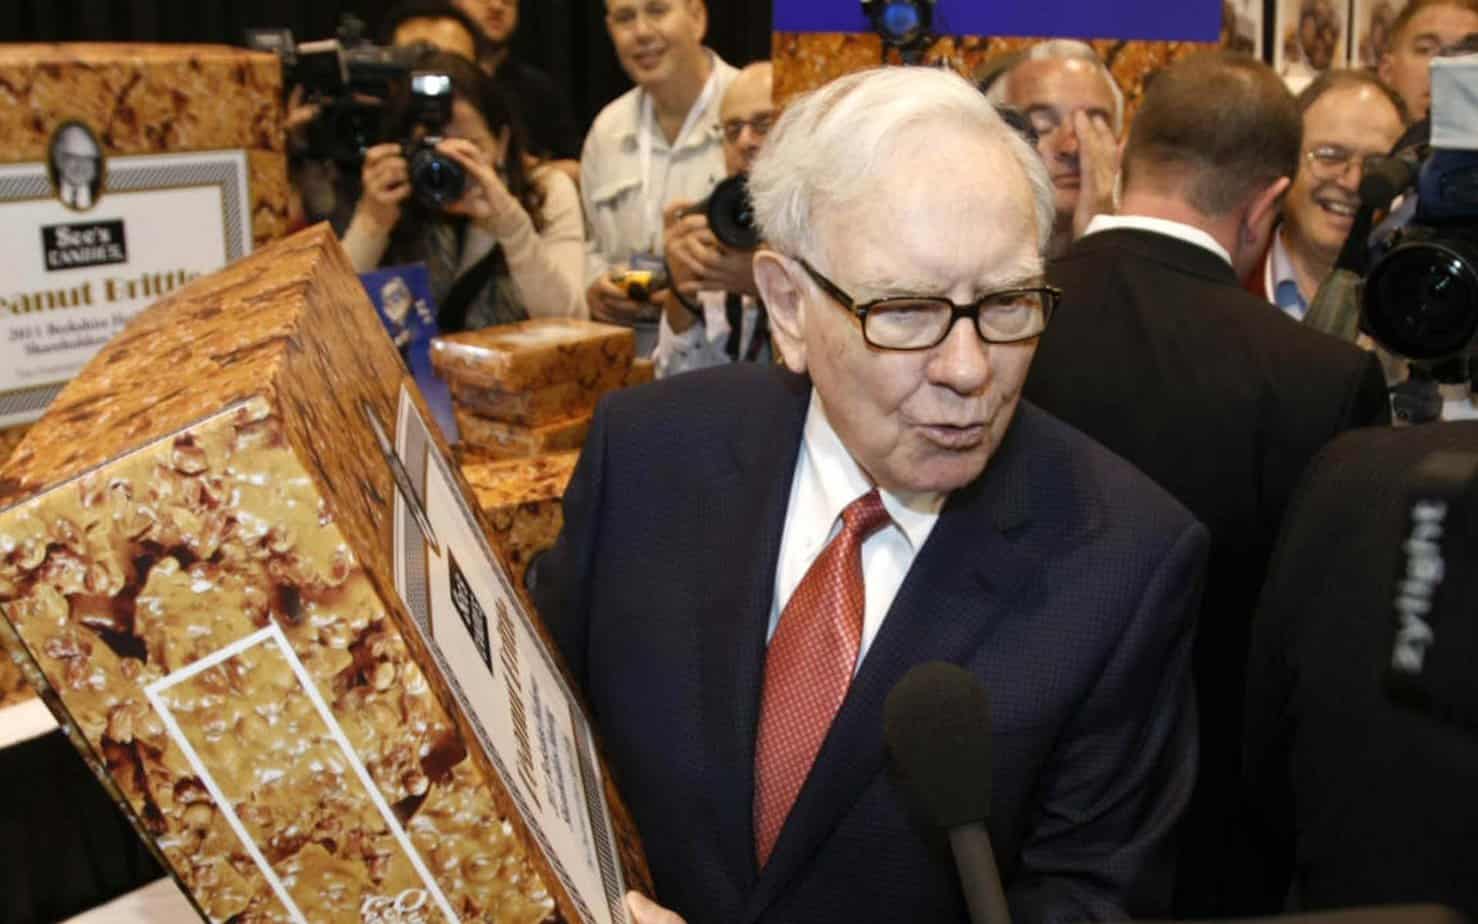 Billionaire Warren Buffett's Favorite Business Is See's Candies